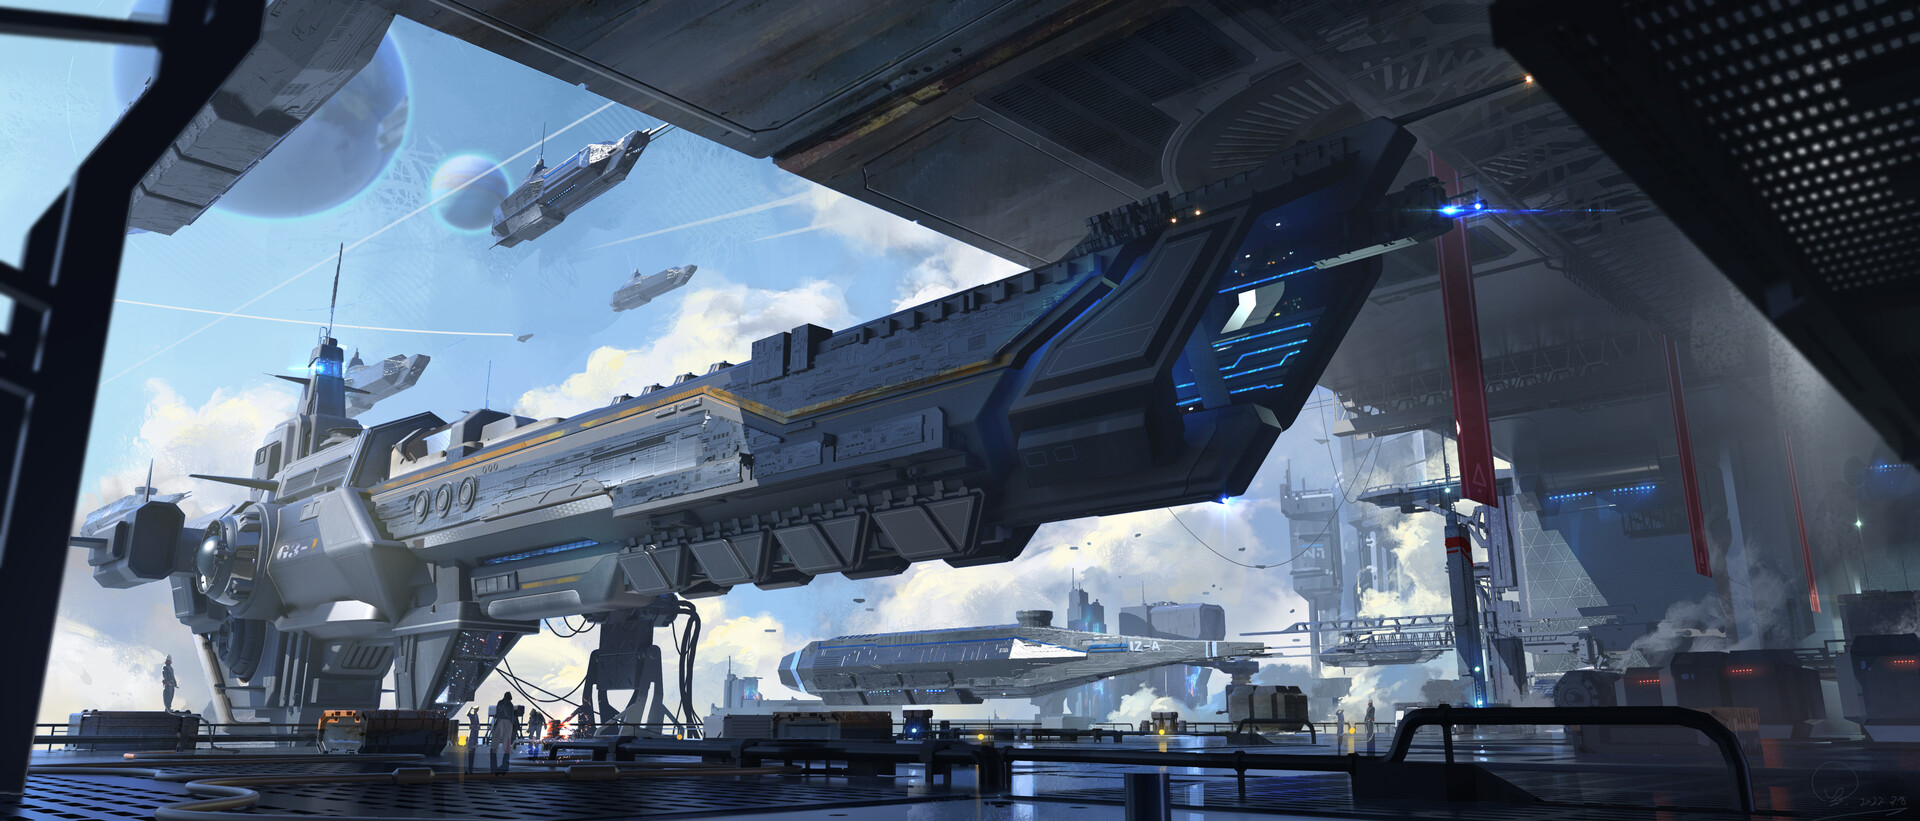 General 1920x821 artwork digital art illustration futuristic spaceship dockyard concept art